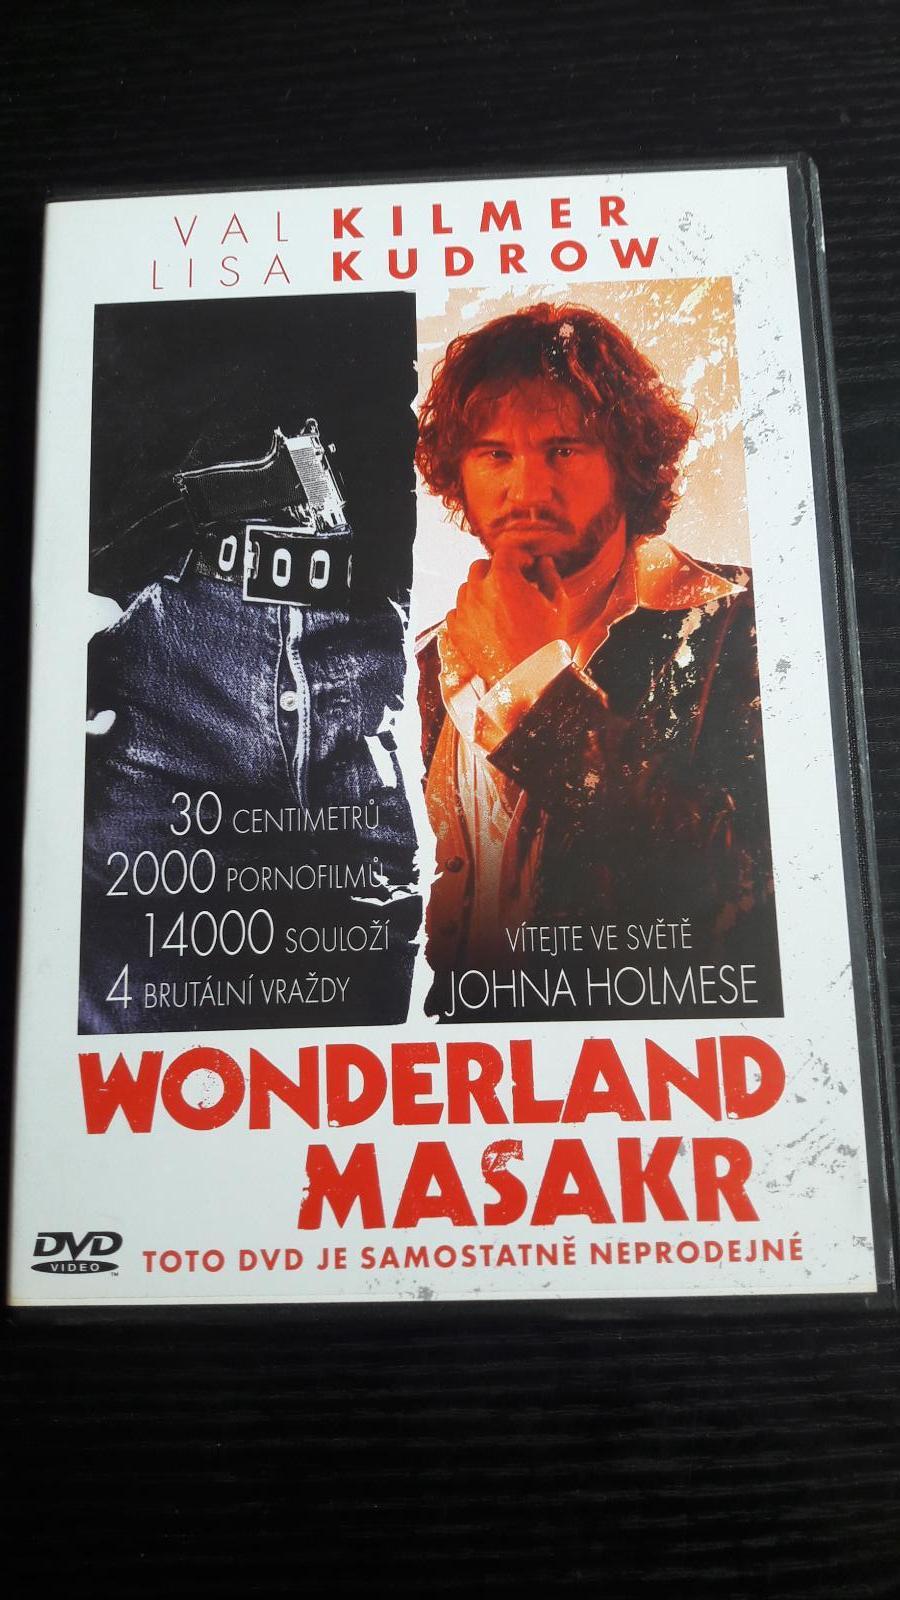 Wunderland-Masakr-DVD / Wonderland